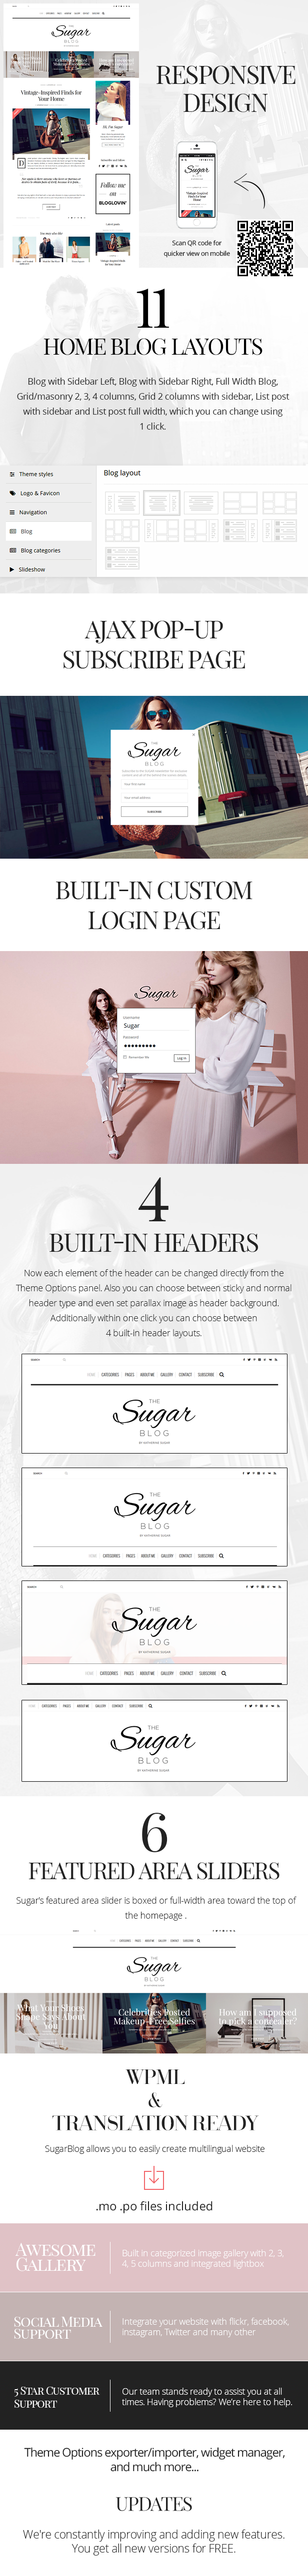 Sugar - Clean & Personal WordPress Blog Theme - 6